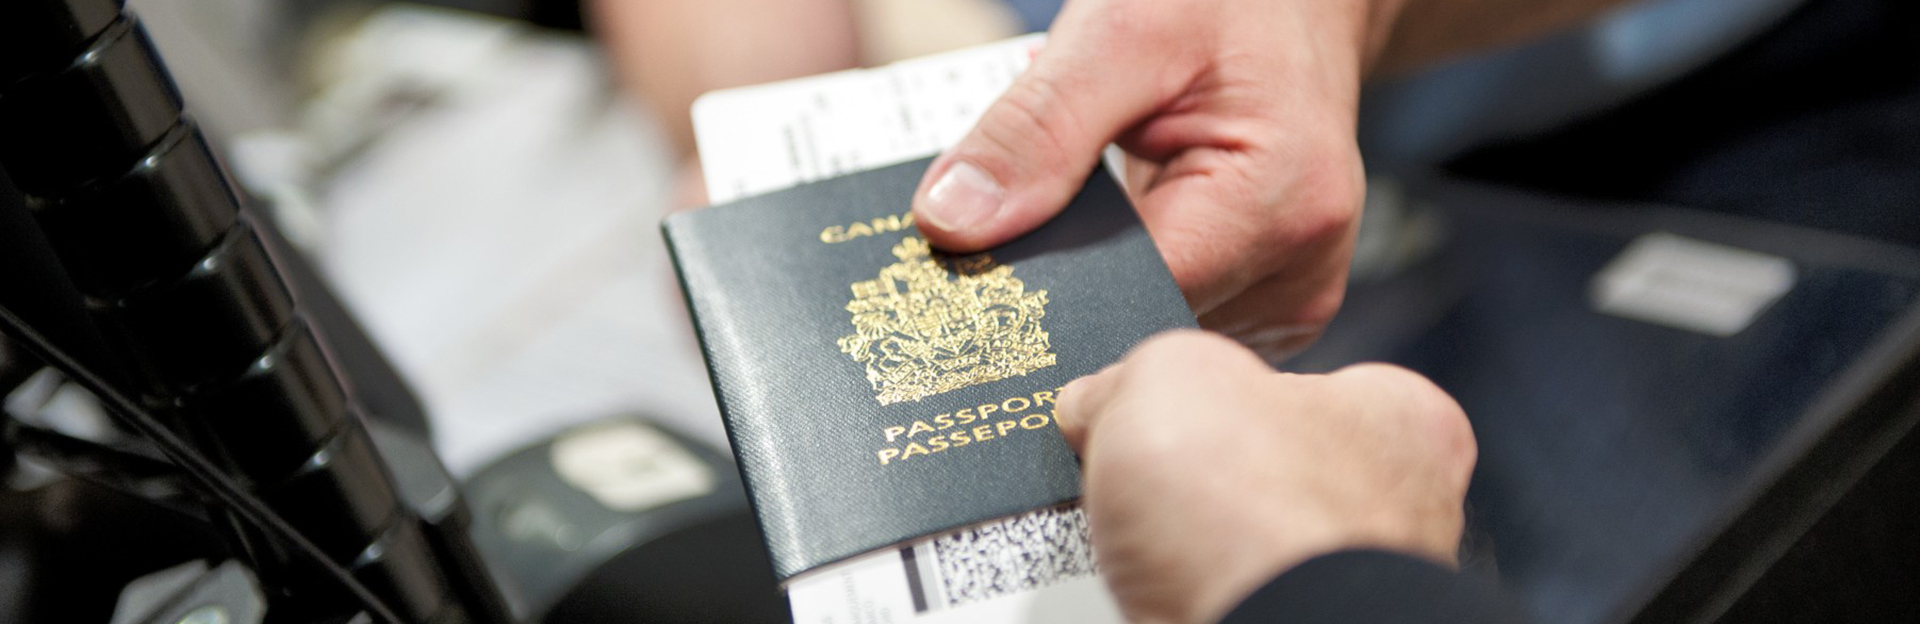 united airline app passport scan not saving